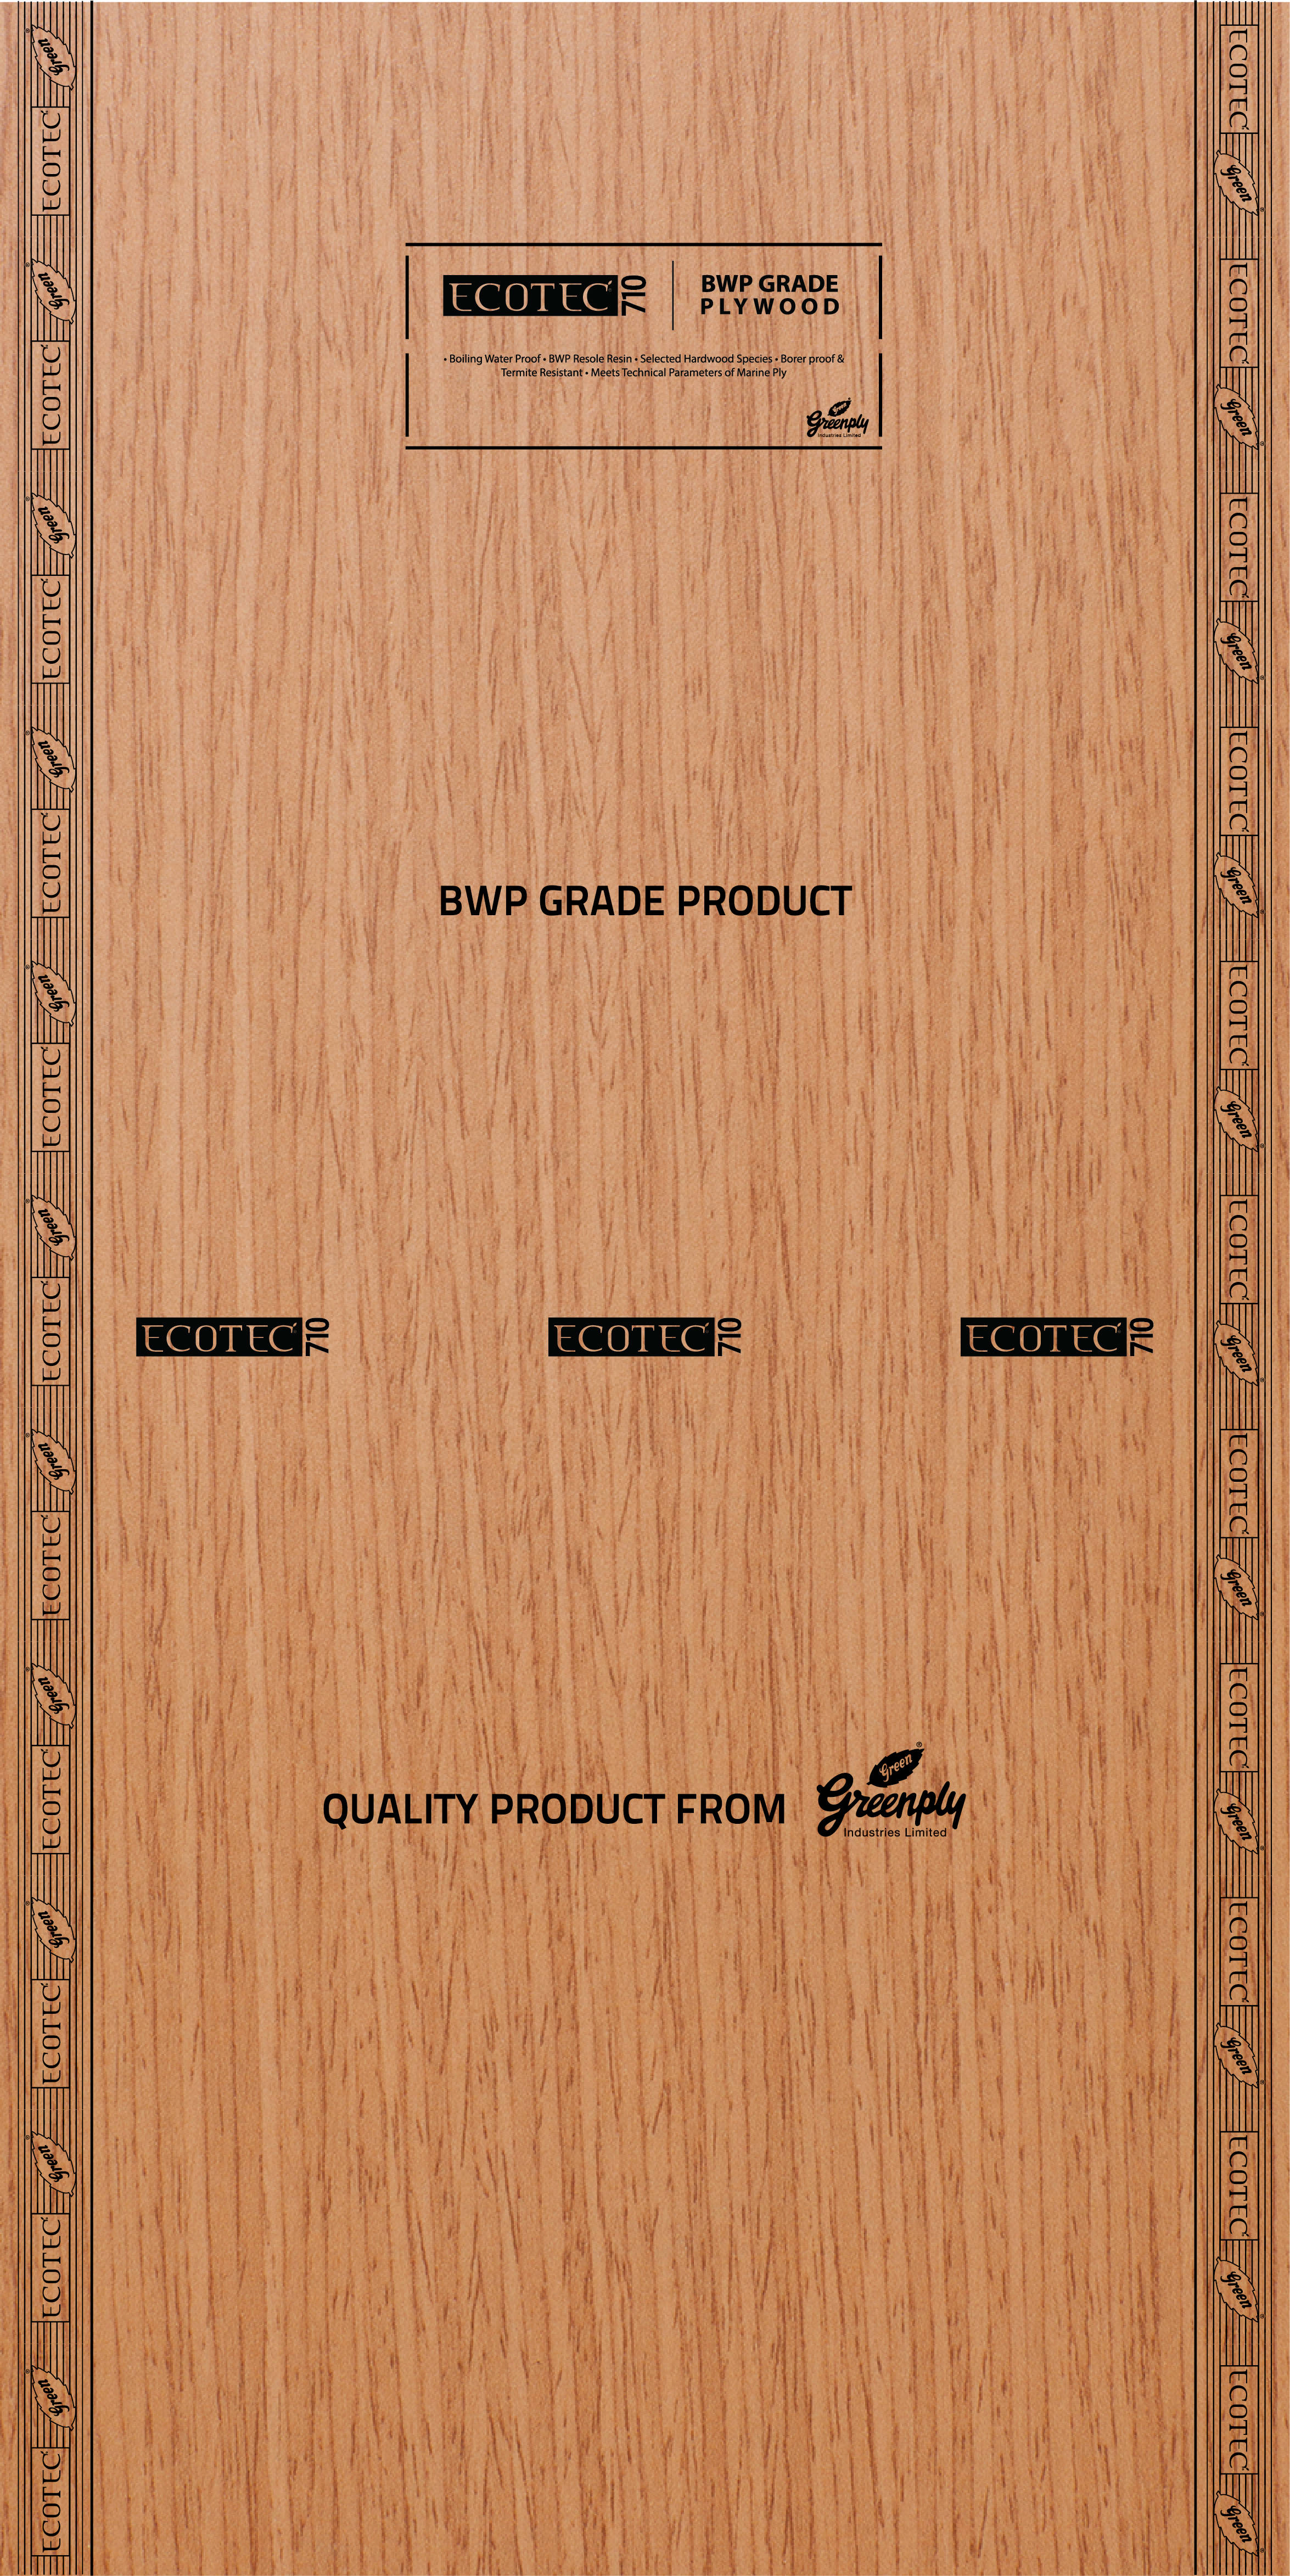 GreenPly Ecotec BWP 710 16mm